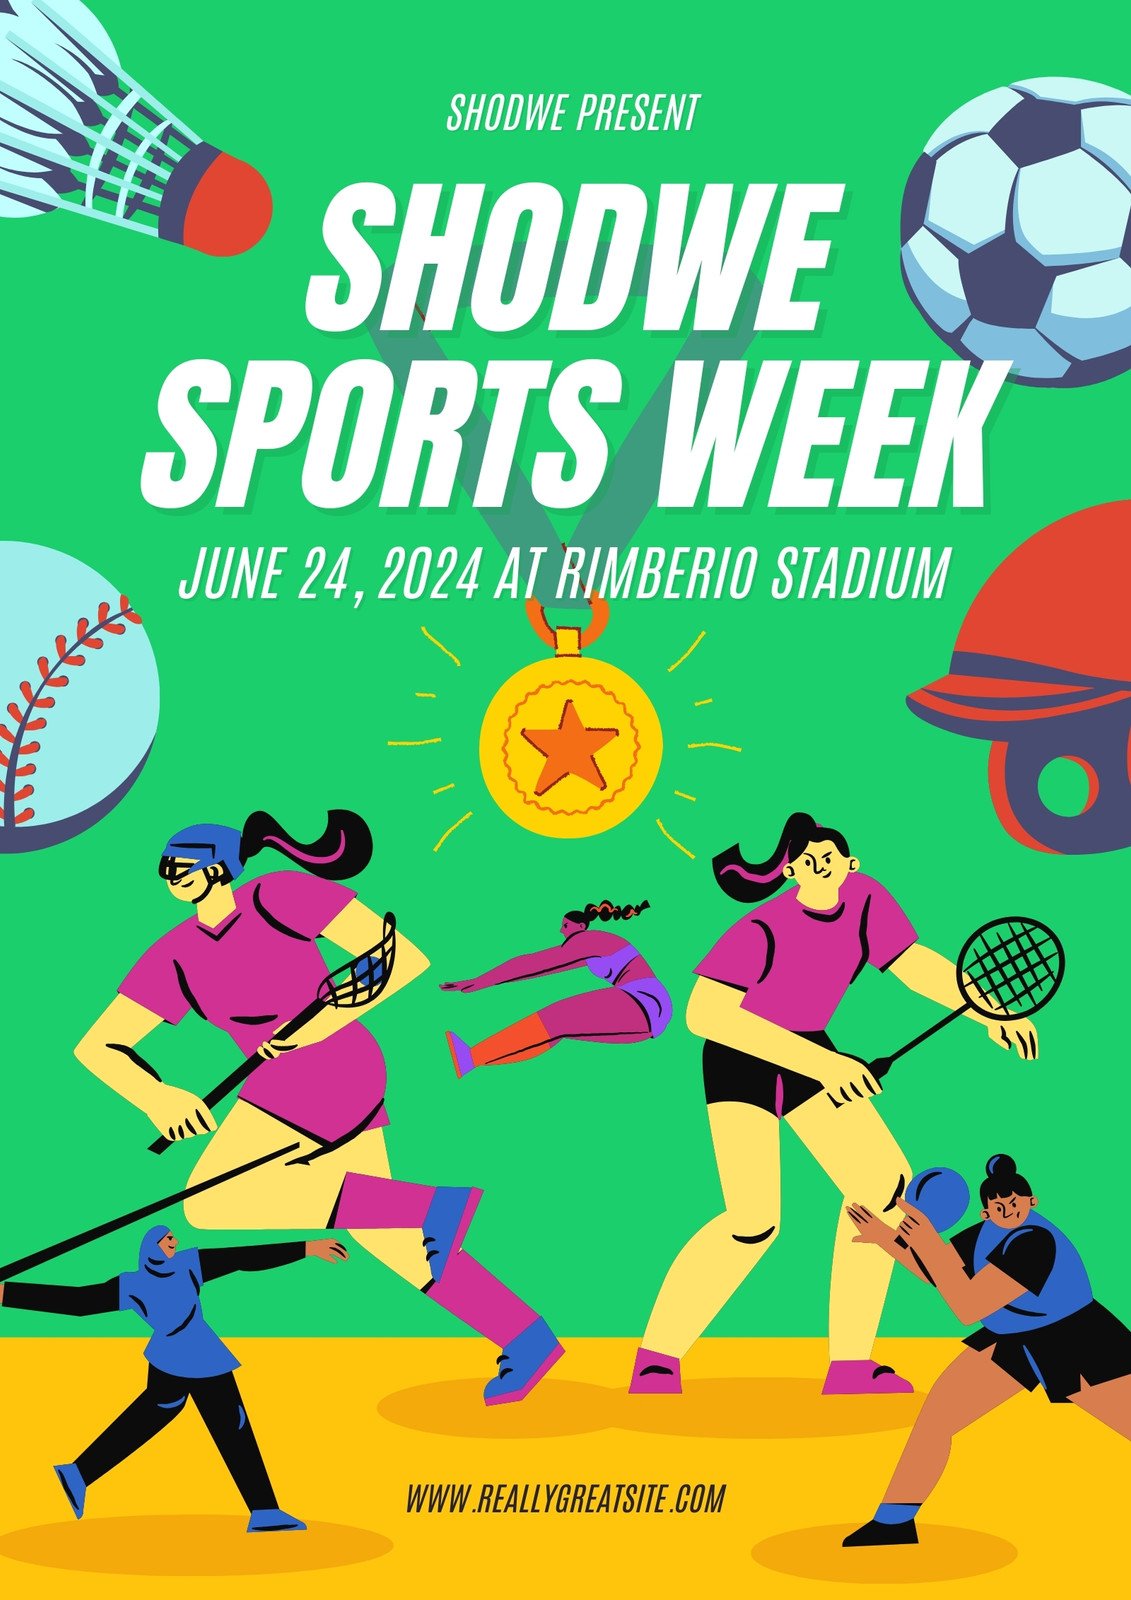 https://marketplace.canva.com/EAF4vgpO-_U/1/0/1131w/canva-green-and-yellow-sports-week-promo-poster-WHzUpvZEpfE.jpg